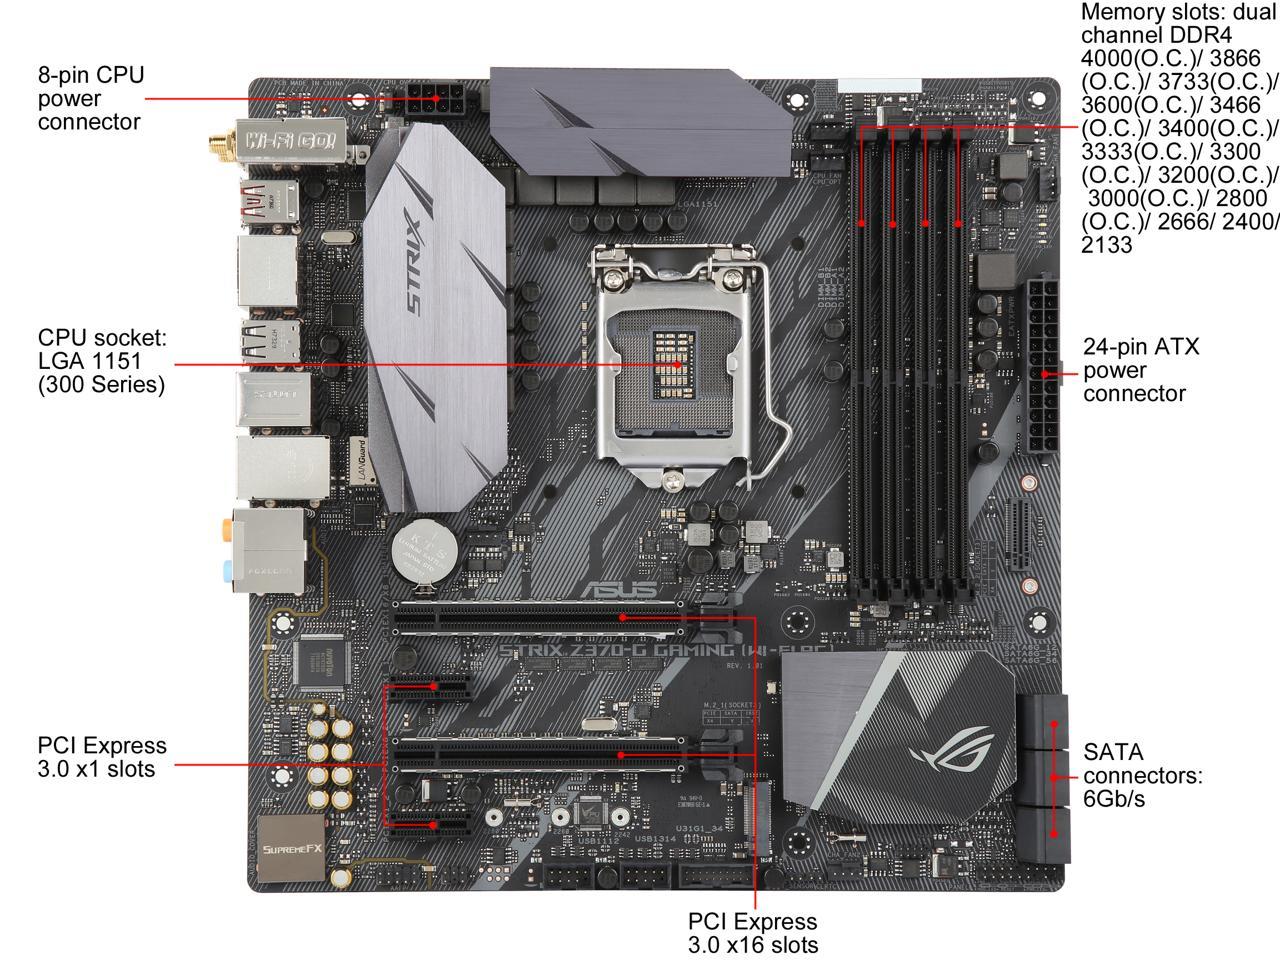 ASUS ROG STRIX Z370-G Gaming (WI-FI AC) LGA 1151 (300 Series) Intel Z370 HDMI SATA 6Gb/s USB 3.1 Micro ATX Intel Motherboard